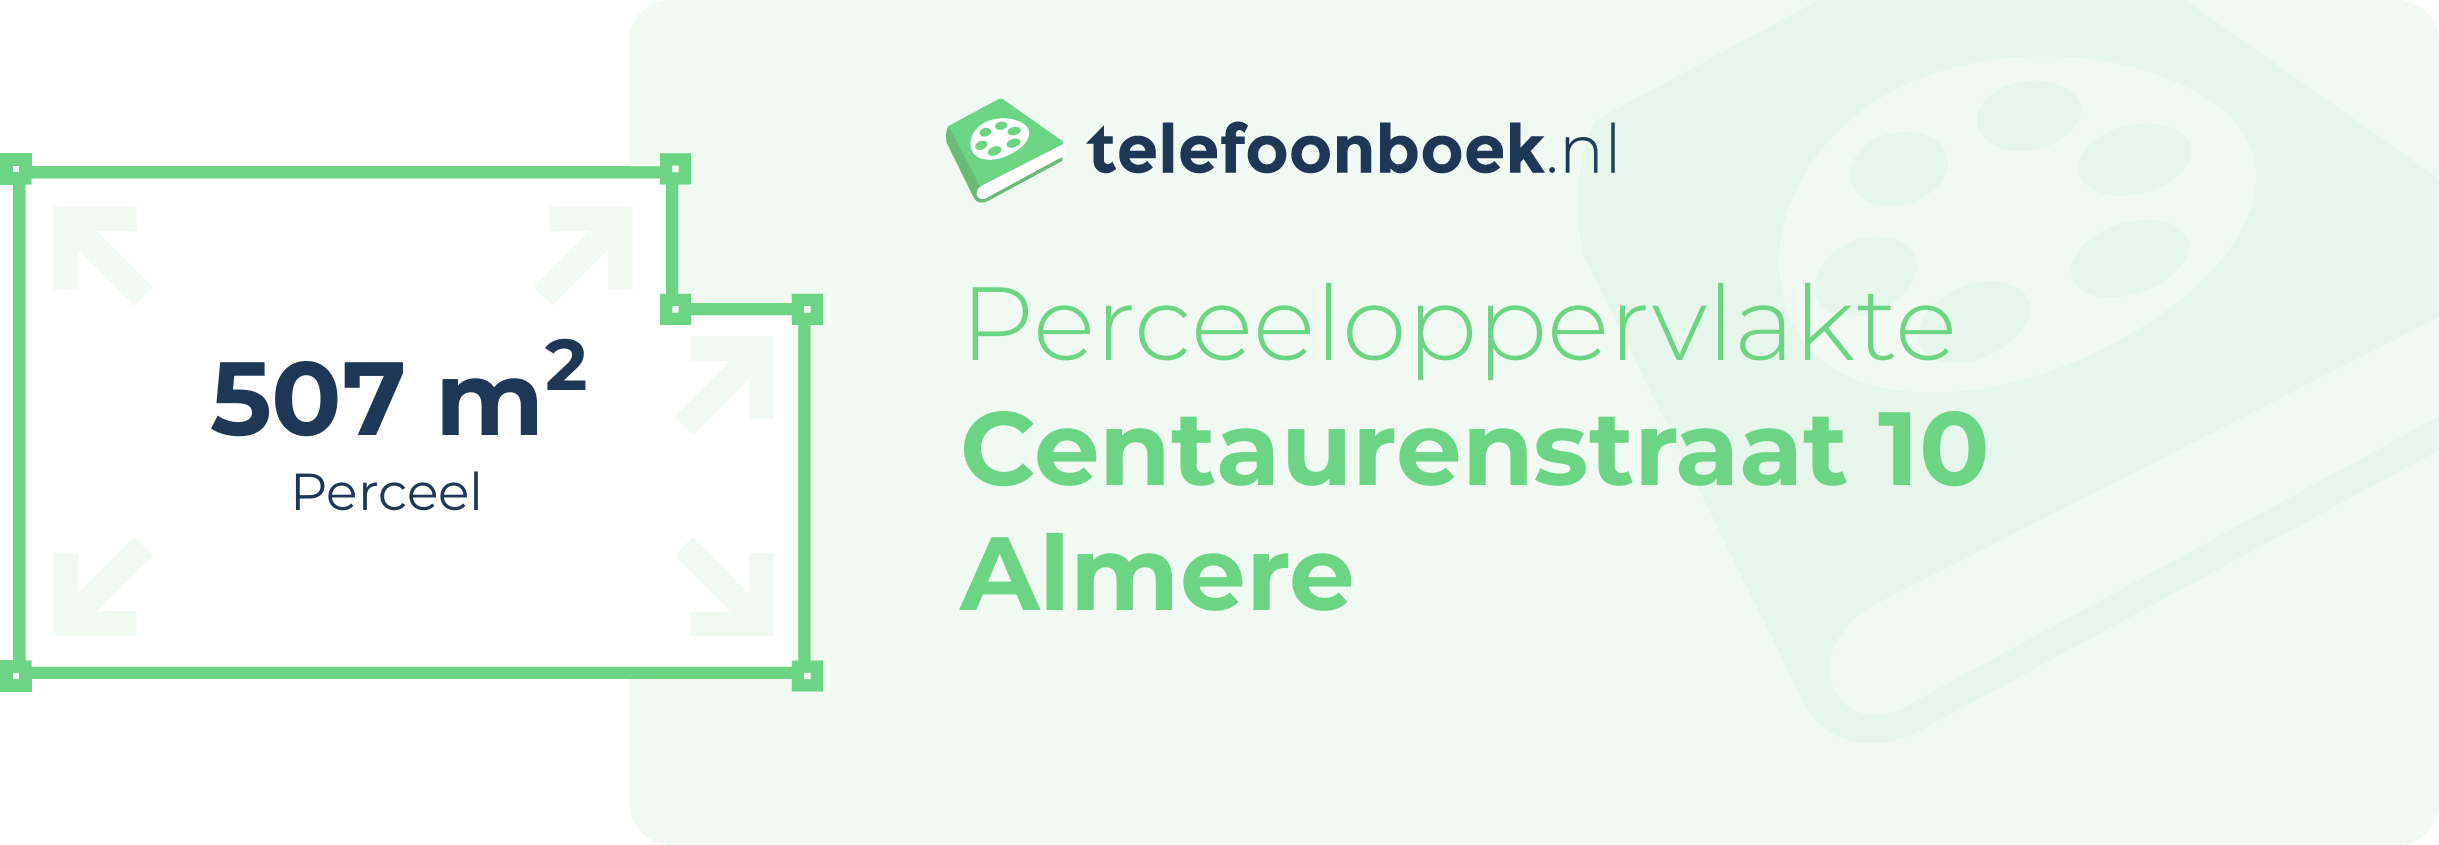 Perceeloppervlakte Centaurenstraat 10 Almere